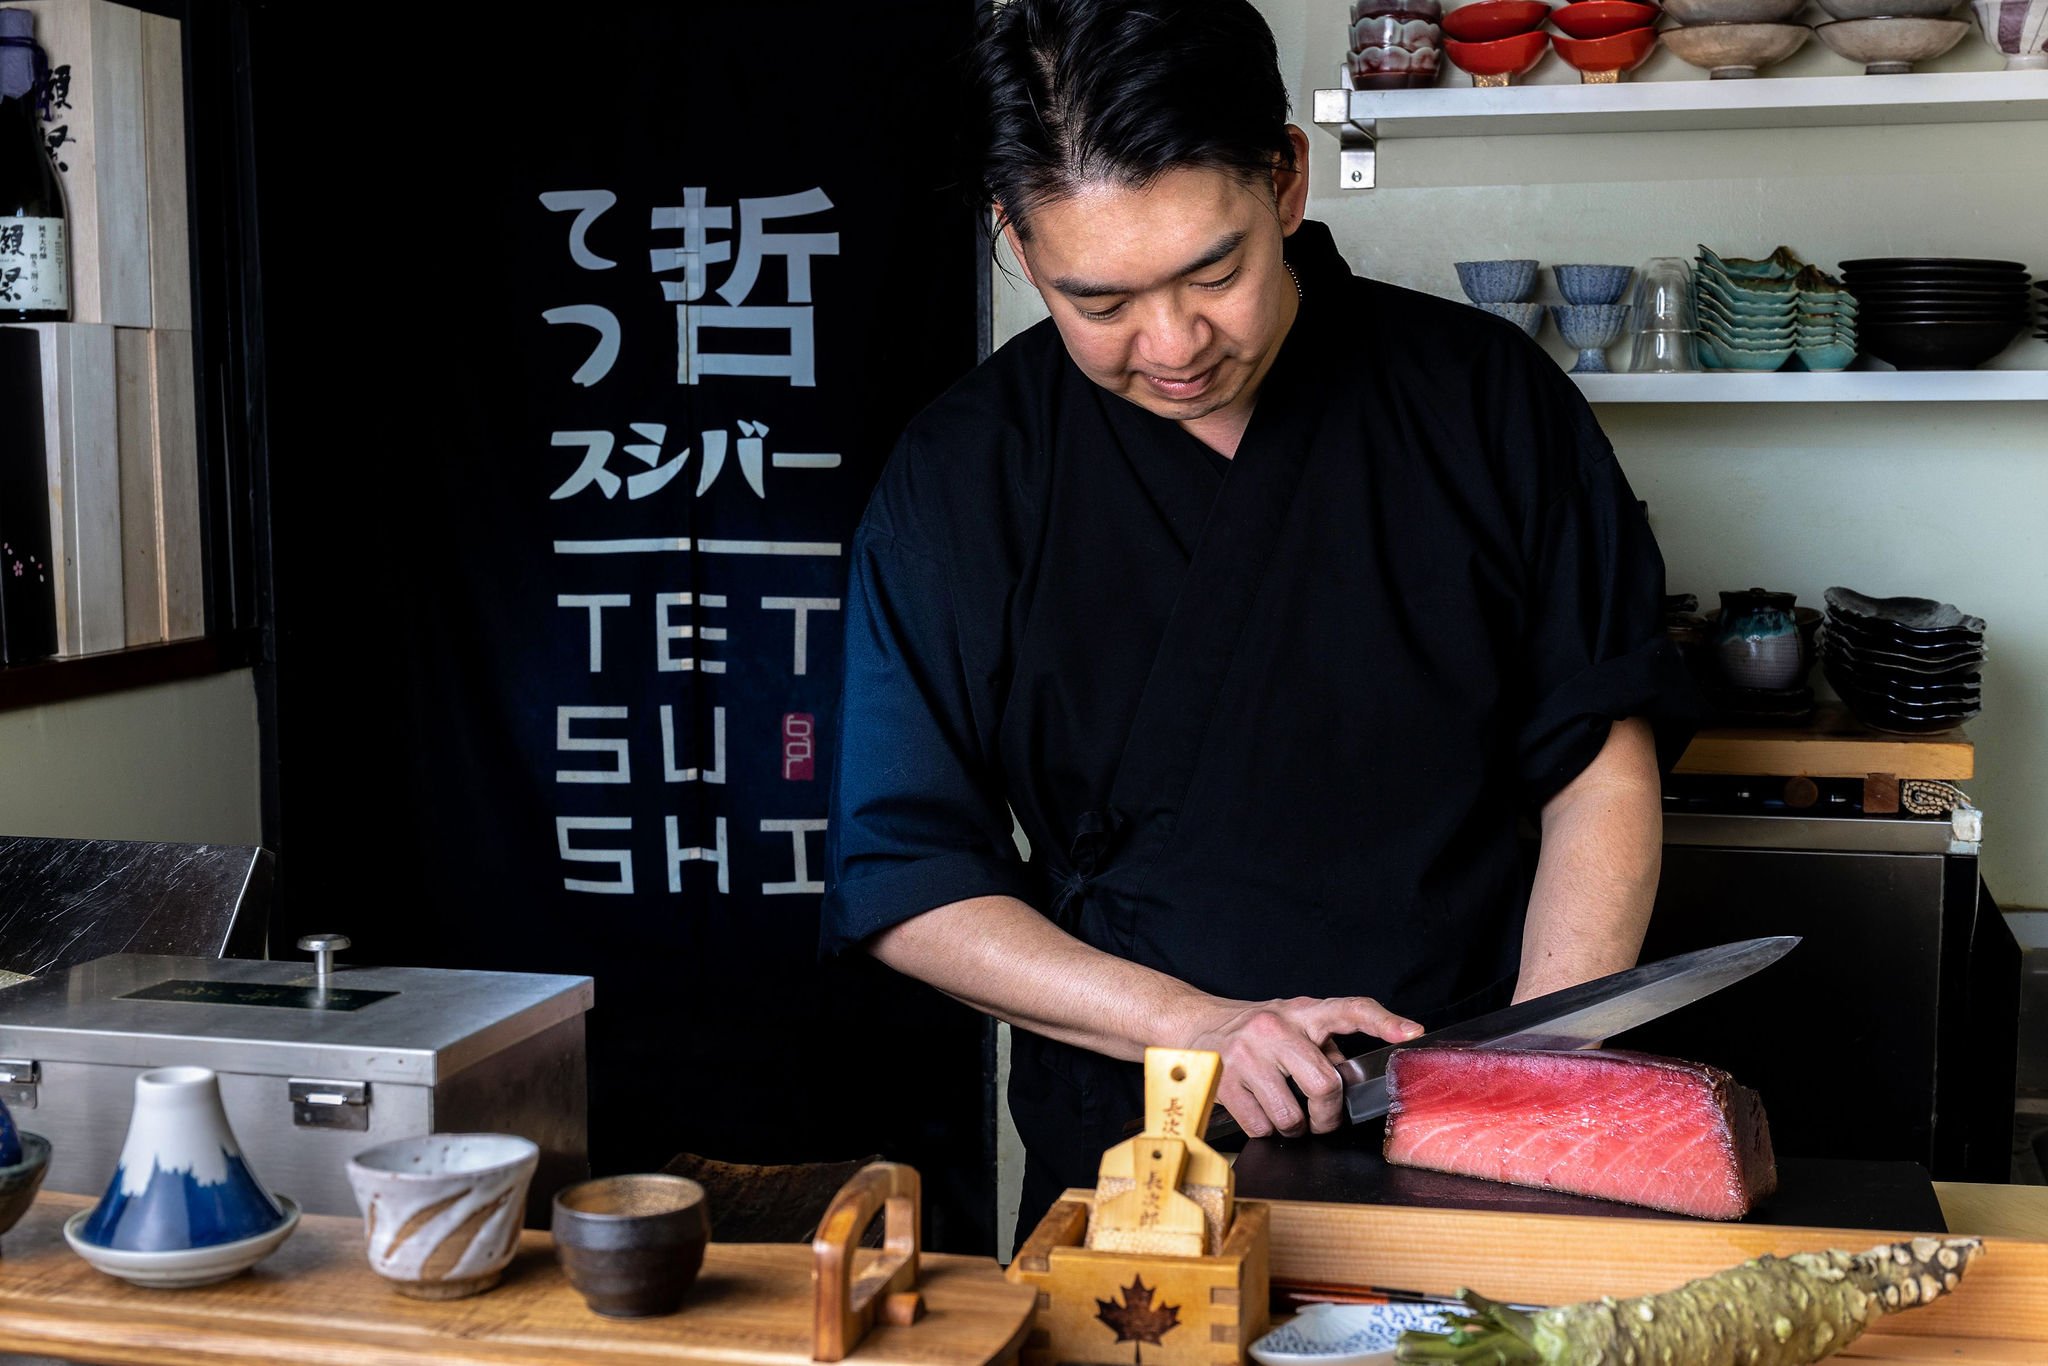 best-omakase-chef-vancouver-bc-tetsu-sushi-bar.jpg